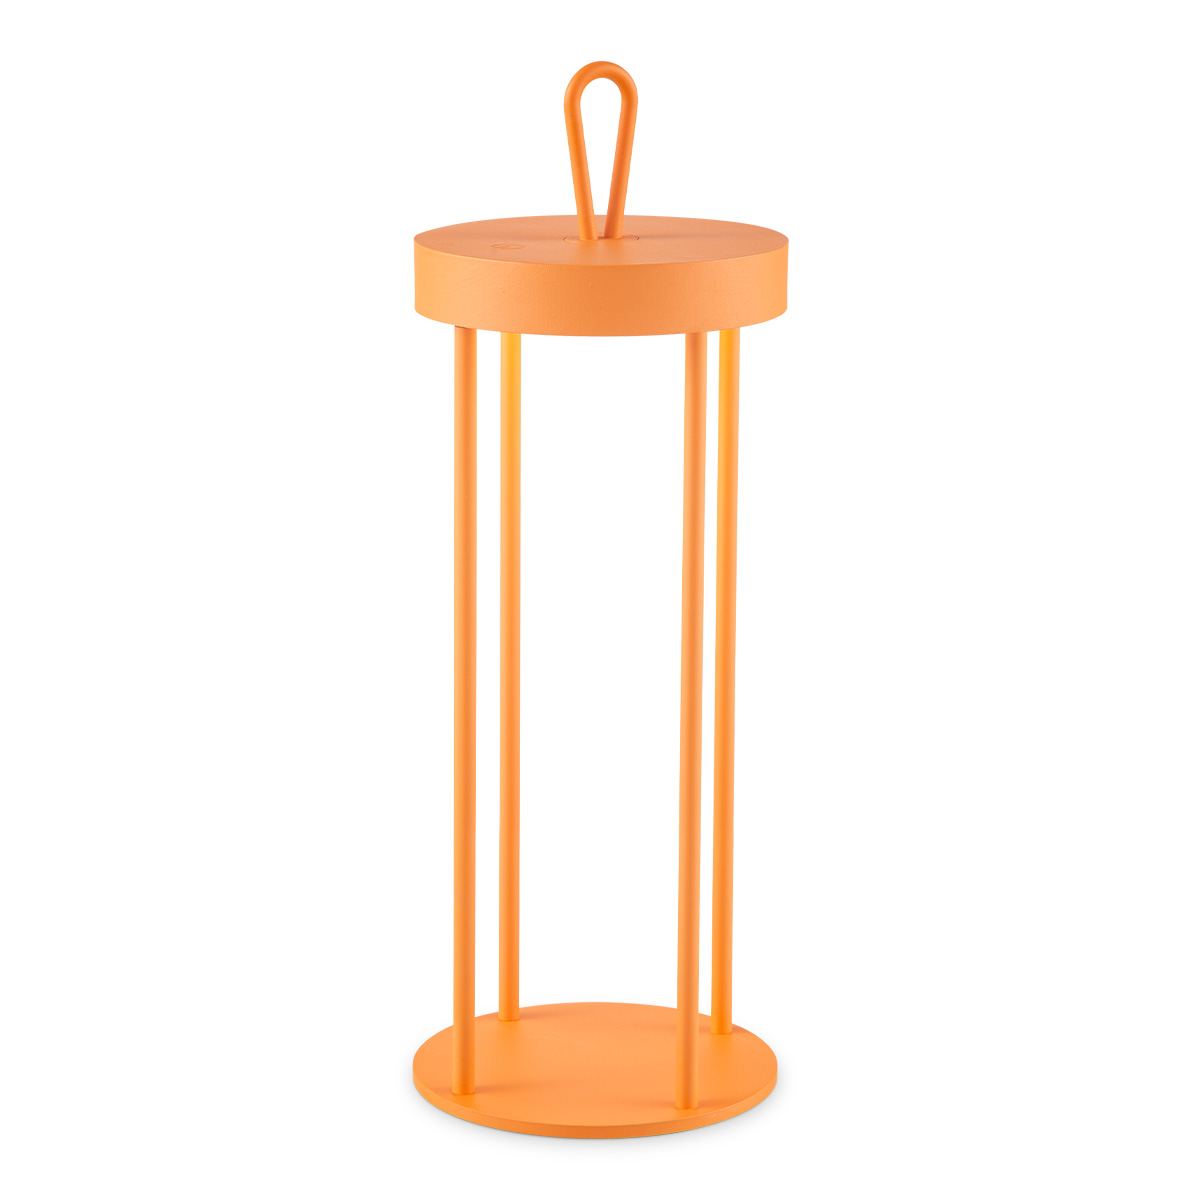 Tangla lighting - TLT7654-01OG - LED table lamp - outdoor lighting - rechargeable plastic and metal - touch dimmer - orange - pavilion